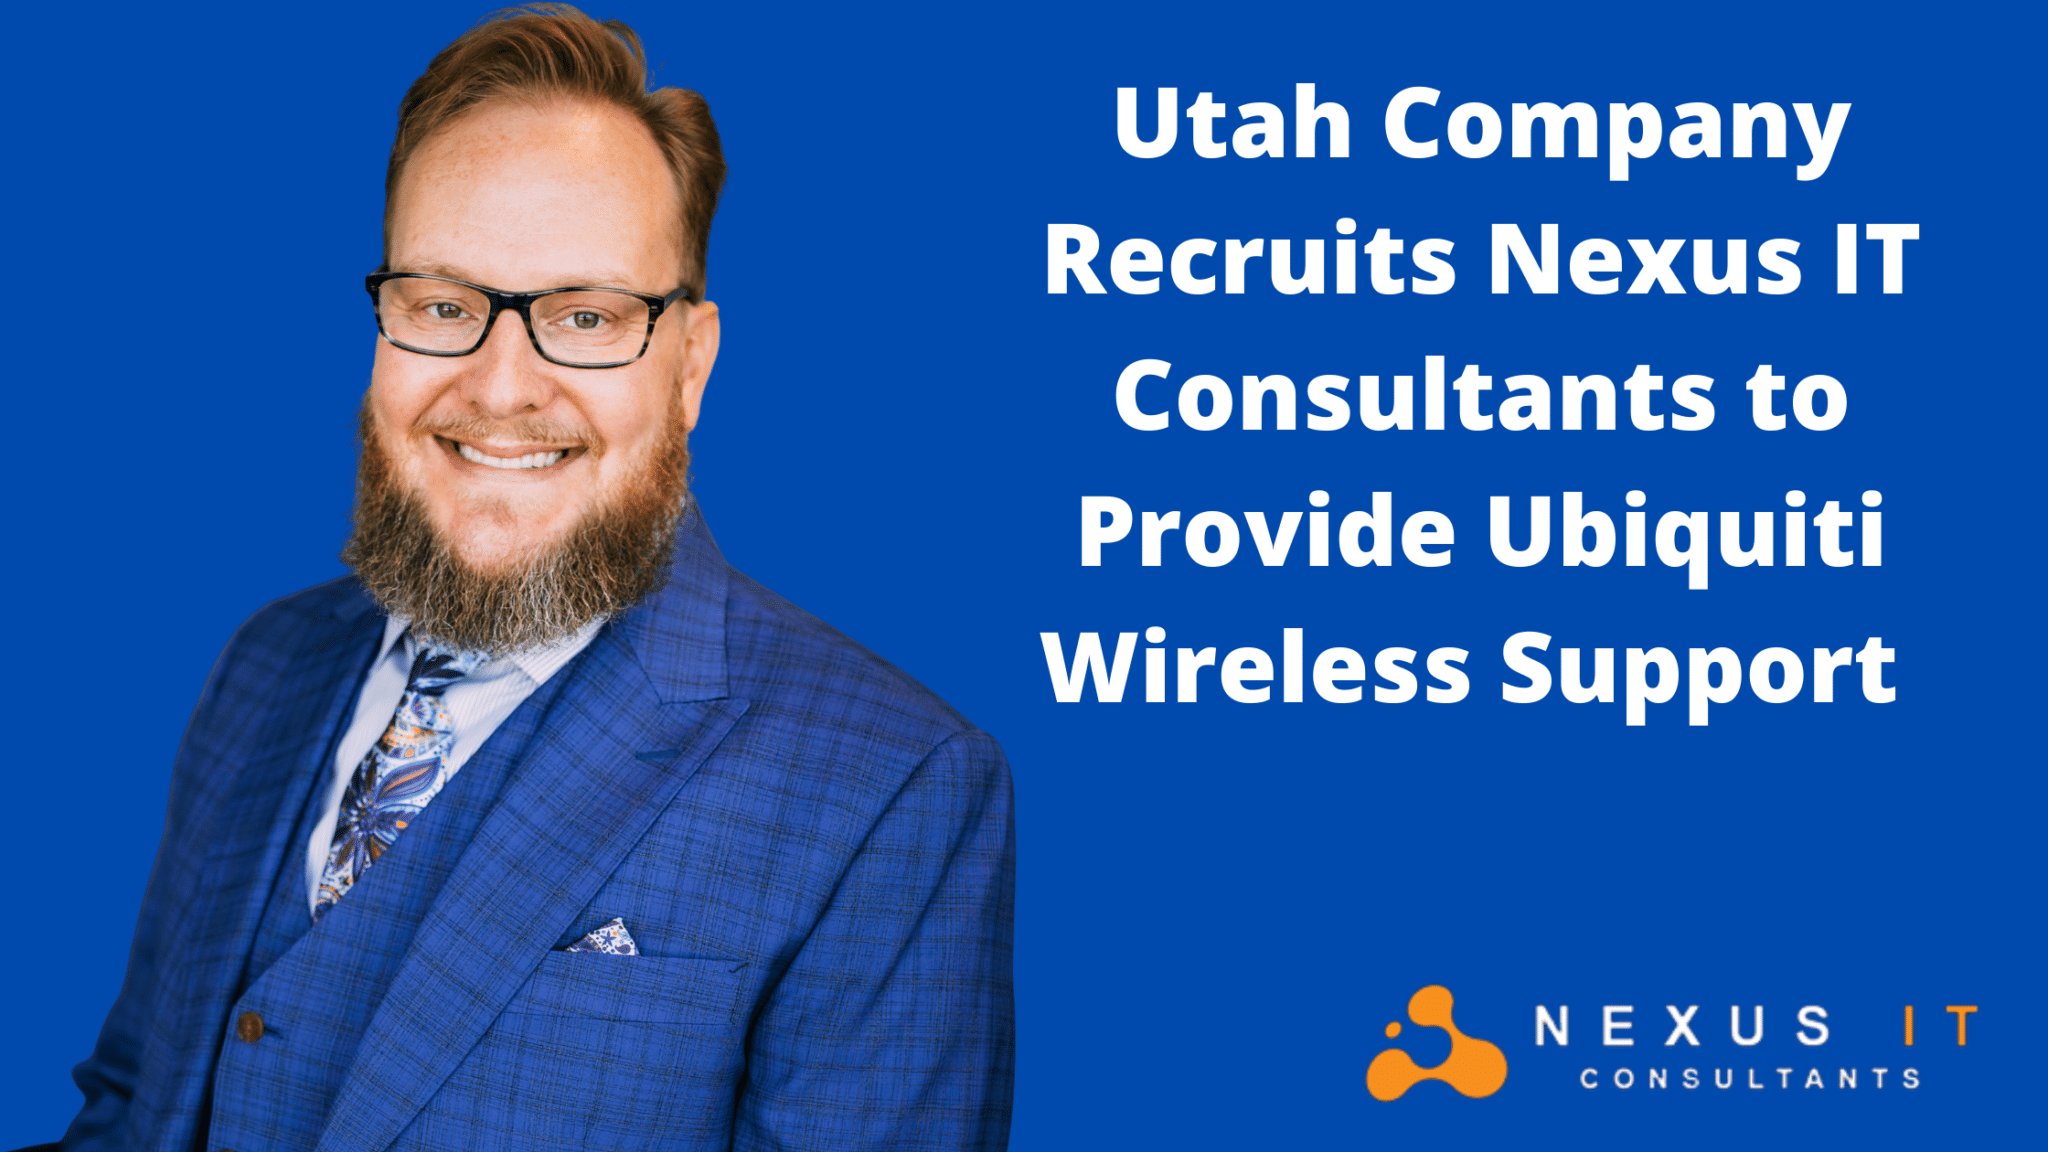 Utah Company Recruits Nexus IT Consultants to Provide Ubiquiti Wireless Support 